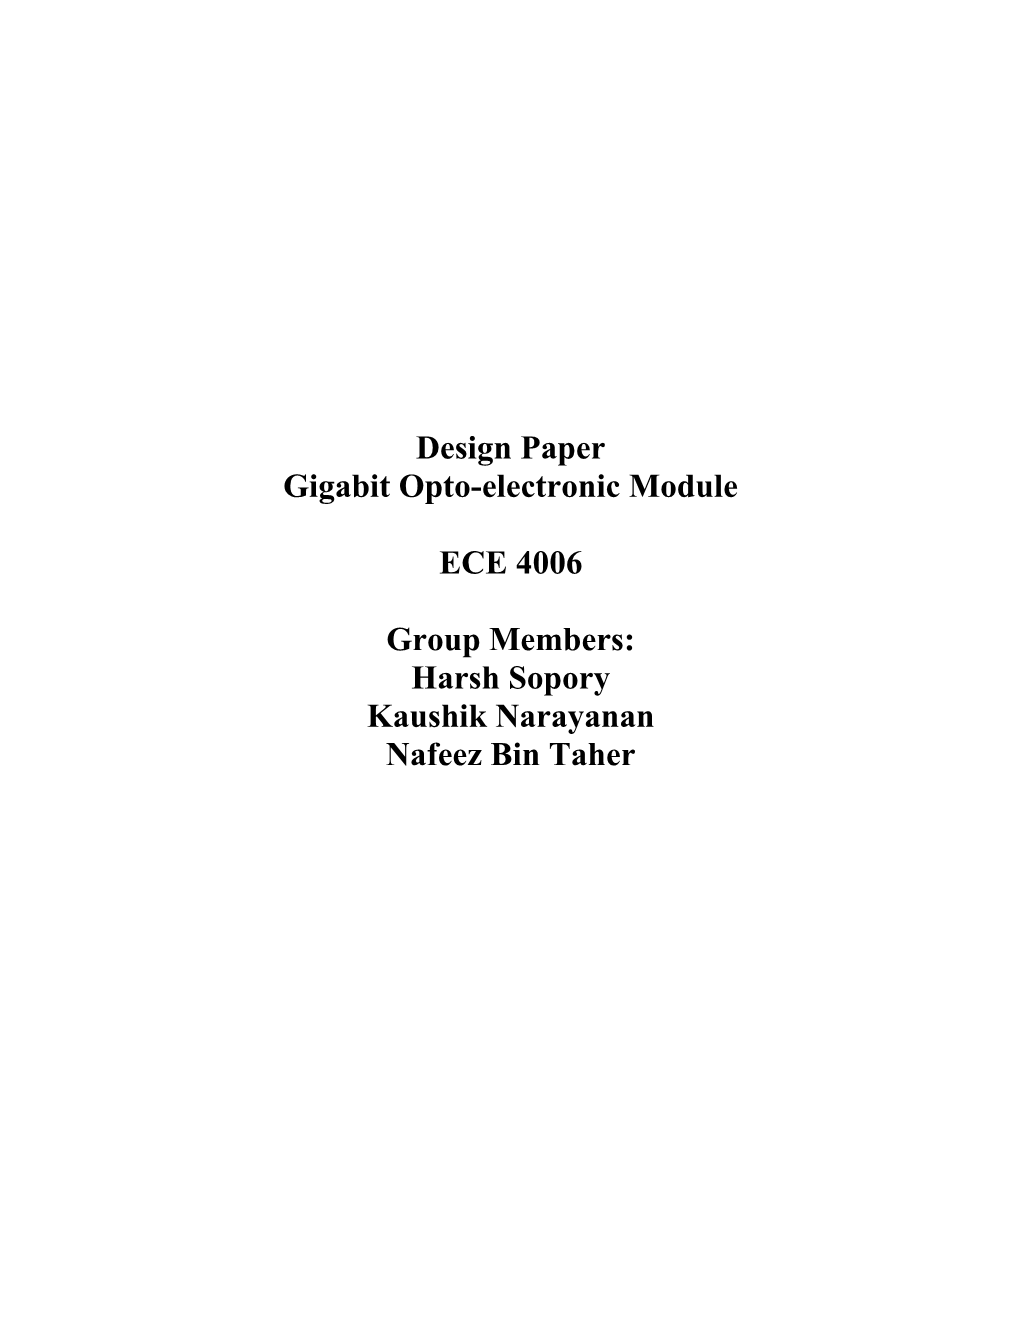 Gigabit Opto-Electronic Module